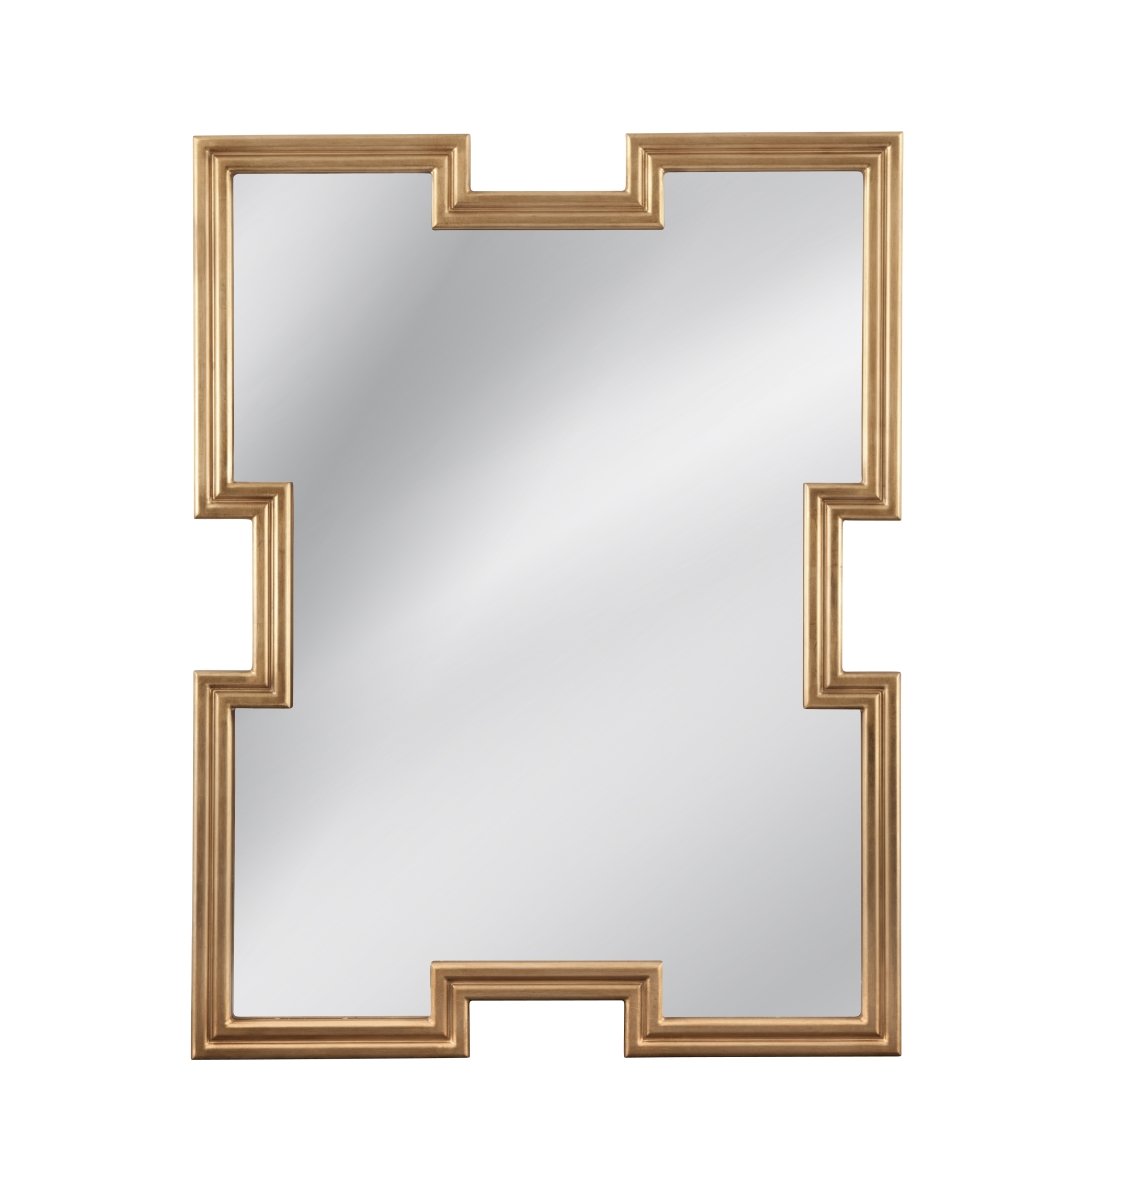 Picture of Bassett Mirror M4878 Gold Leaf Brourke Wall Mirror